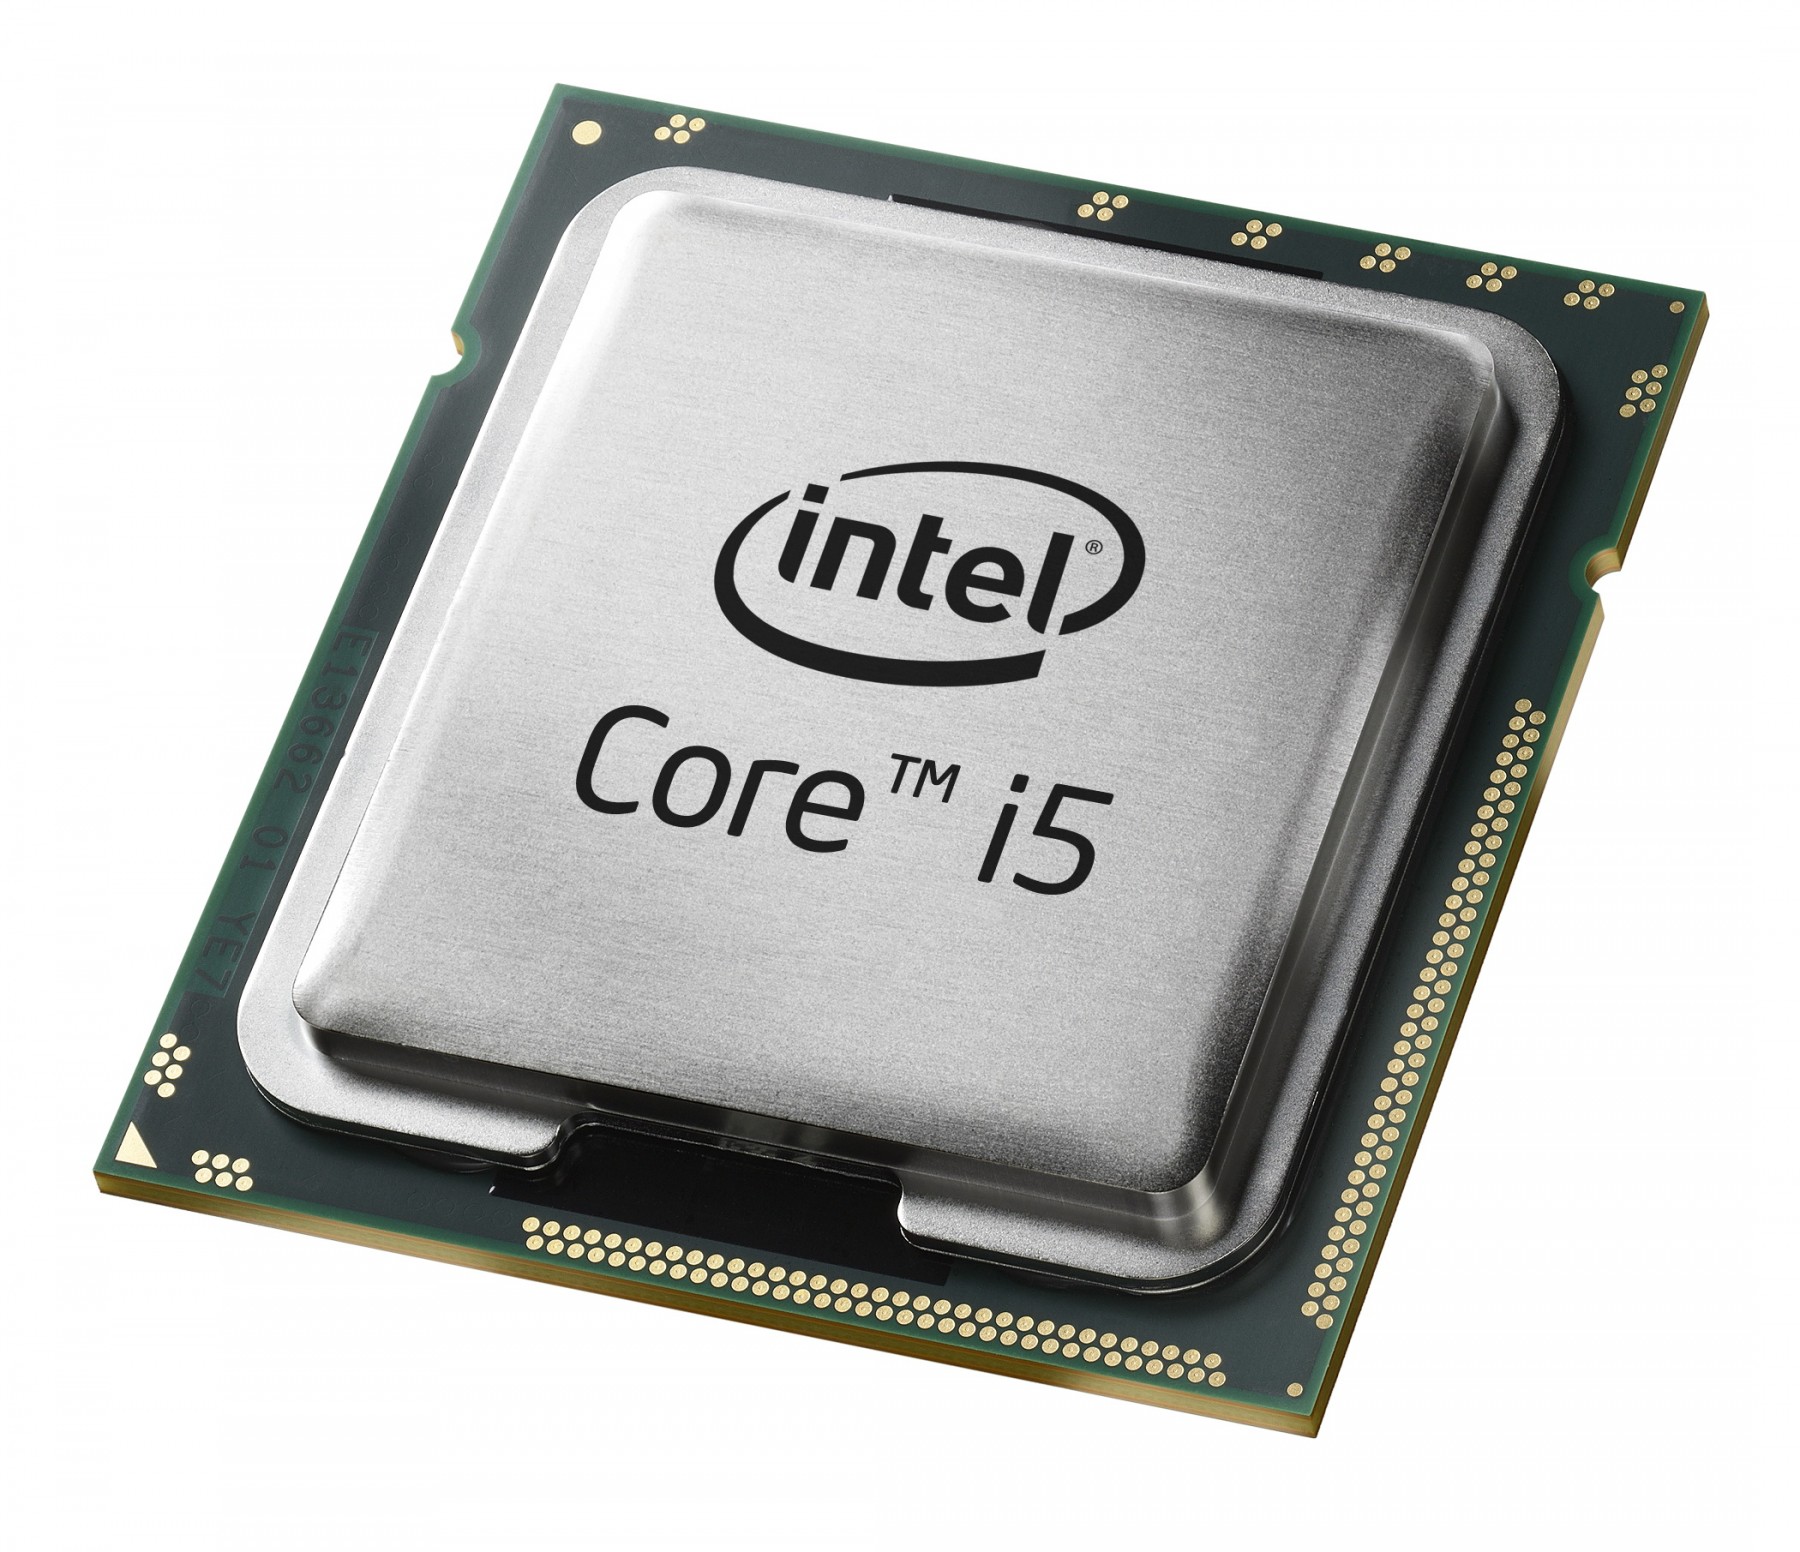 500030077-Intel Core i5-4570TE SR17Z 2.7Ghz 5GT/s LGA 1150 Processor-image